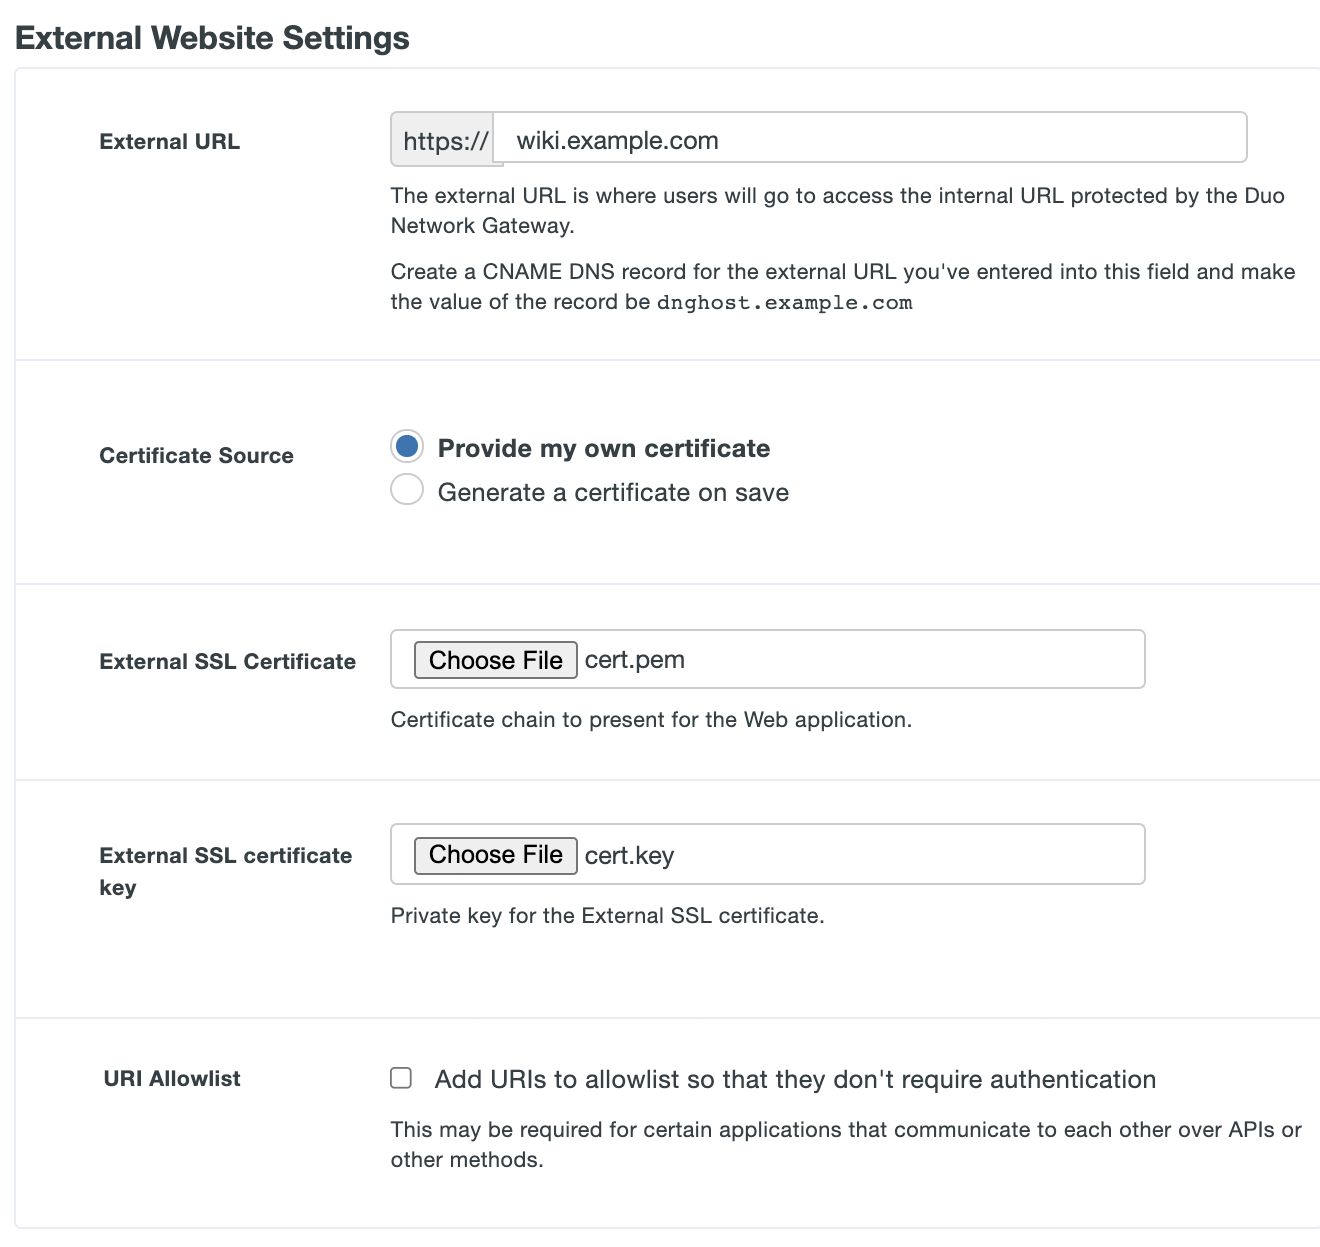 Configure external settings for Duo Network Gateway Application